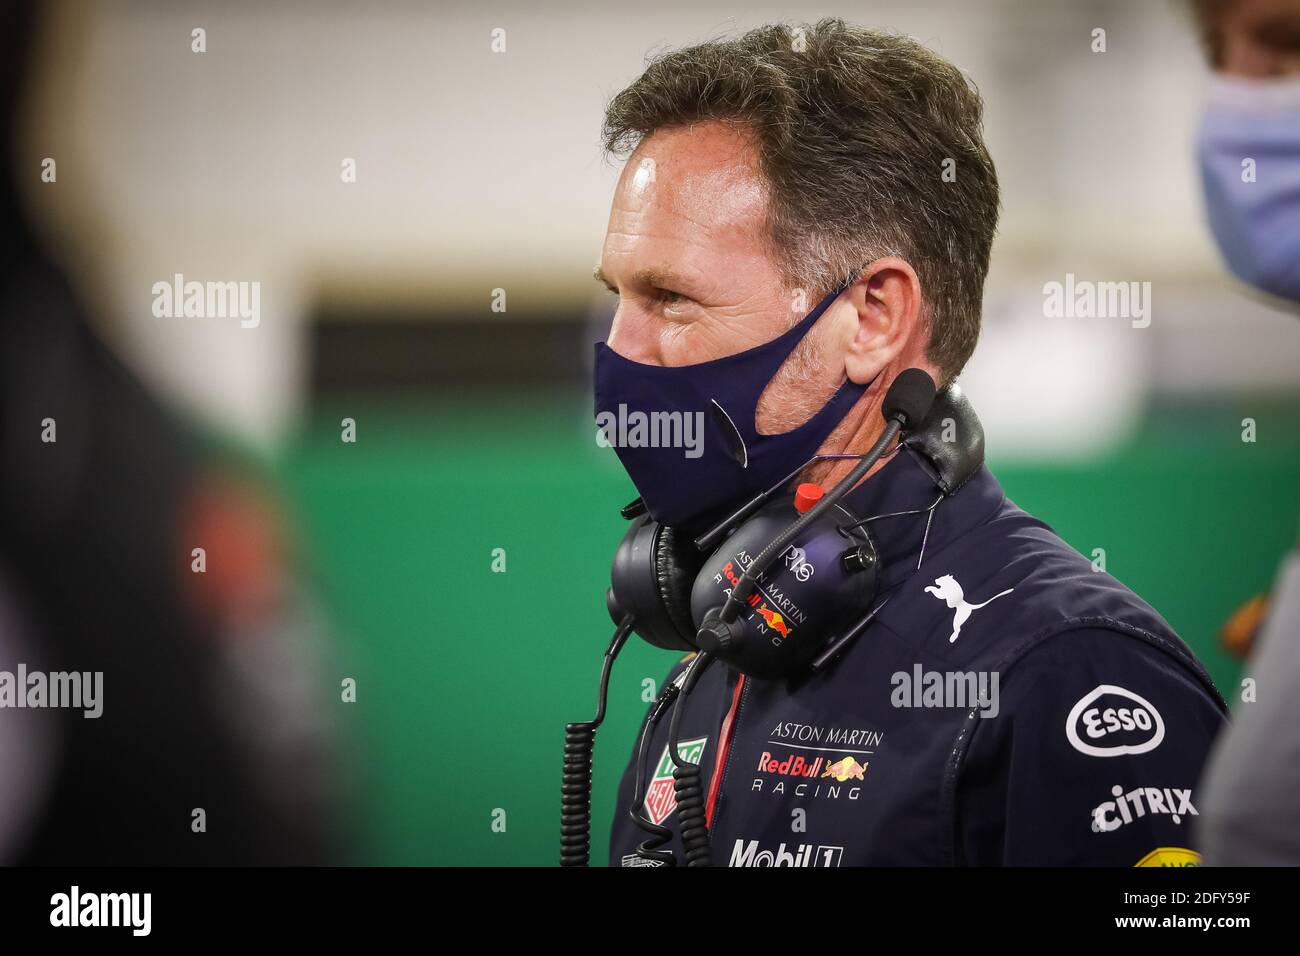 HORNER Christian (gbr), Team Principal of Aston Martin Red Bull Racing, portrait during the Formula 1 Rolex Sakhir Grand Prix / LM Stock Photo